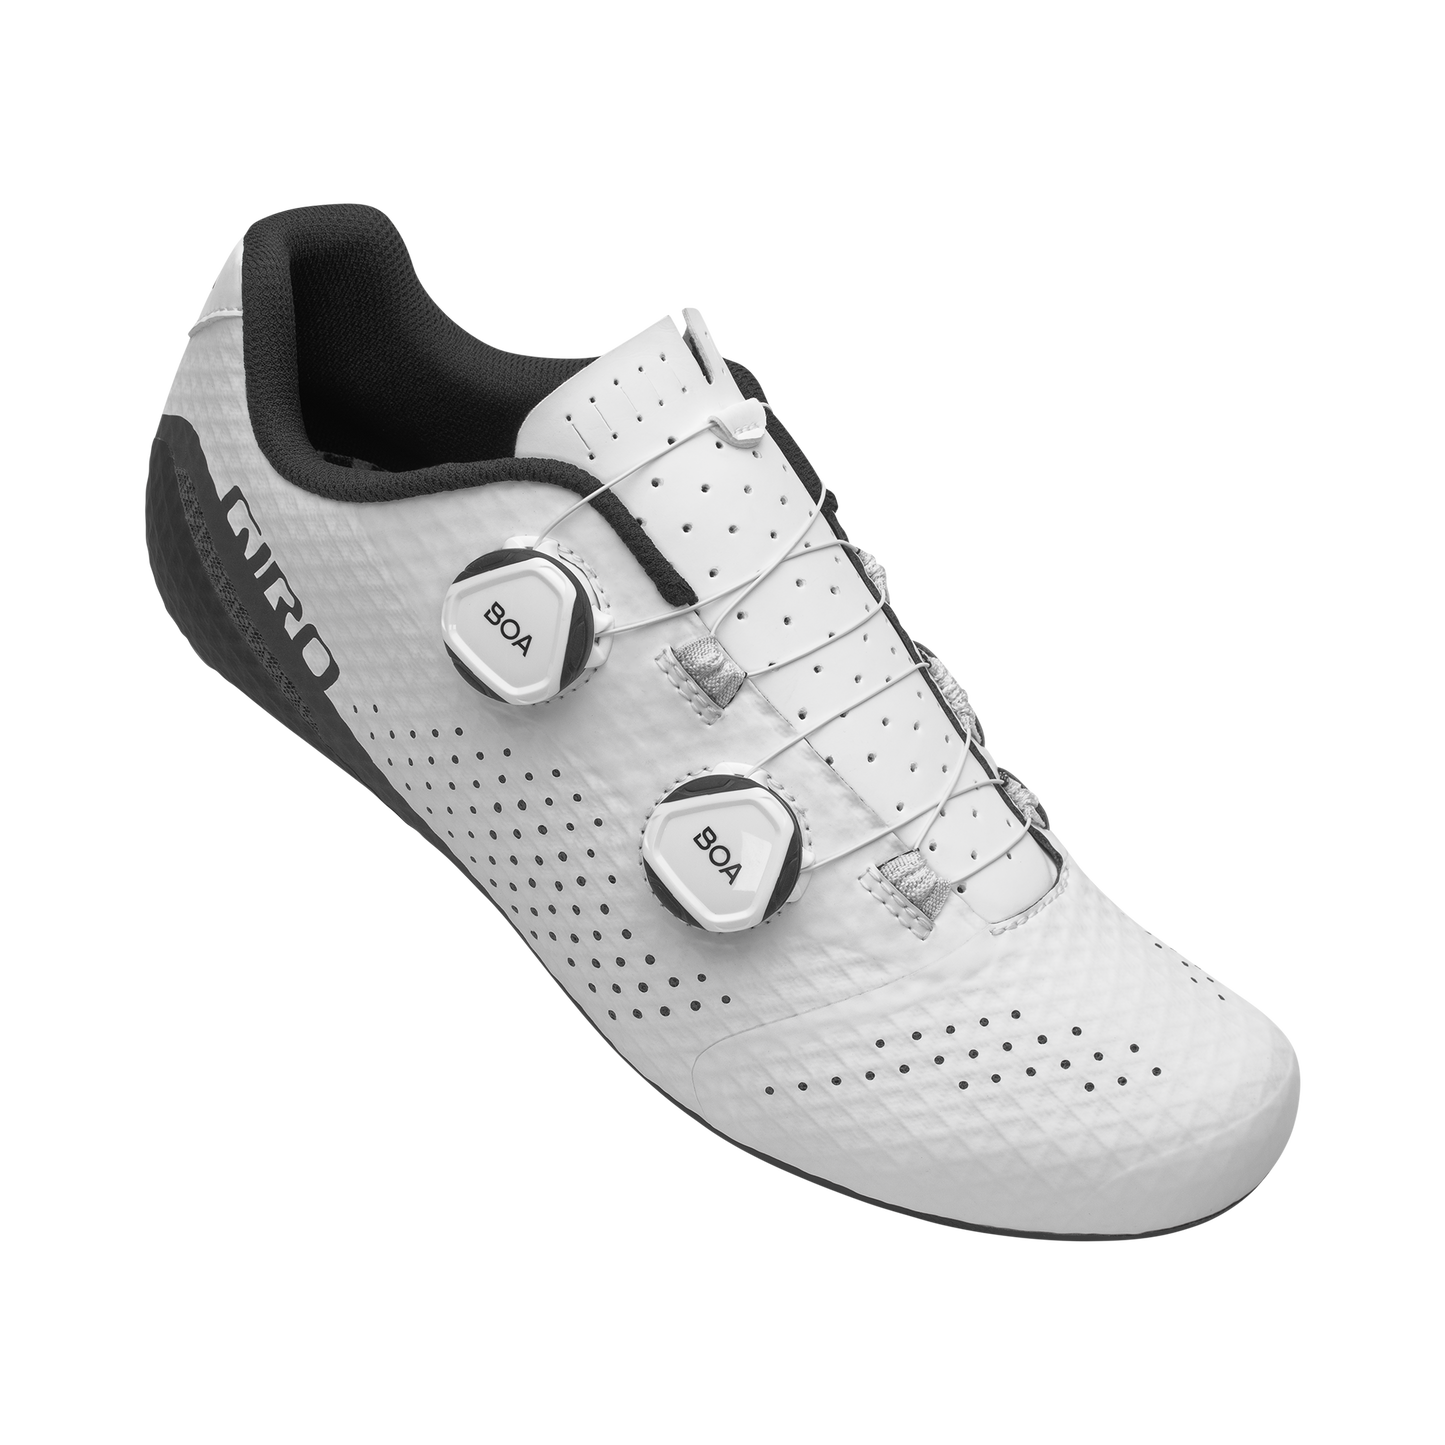 Giro Regime 公路單車鞋 / Giro Regime Road Cycling Shoes